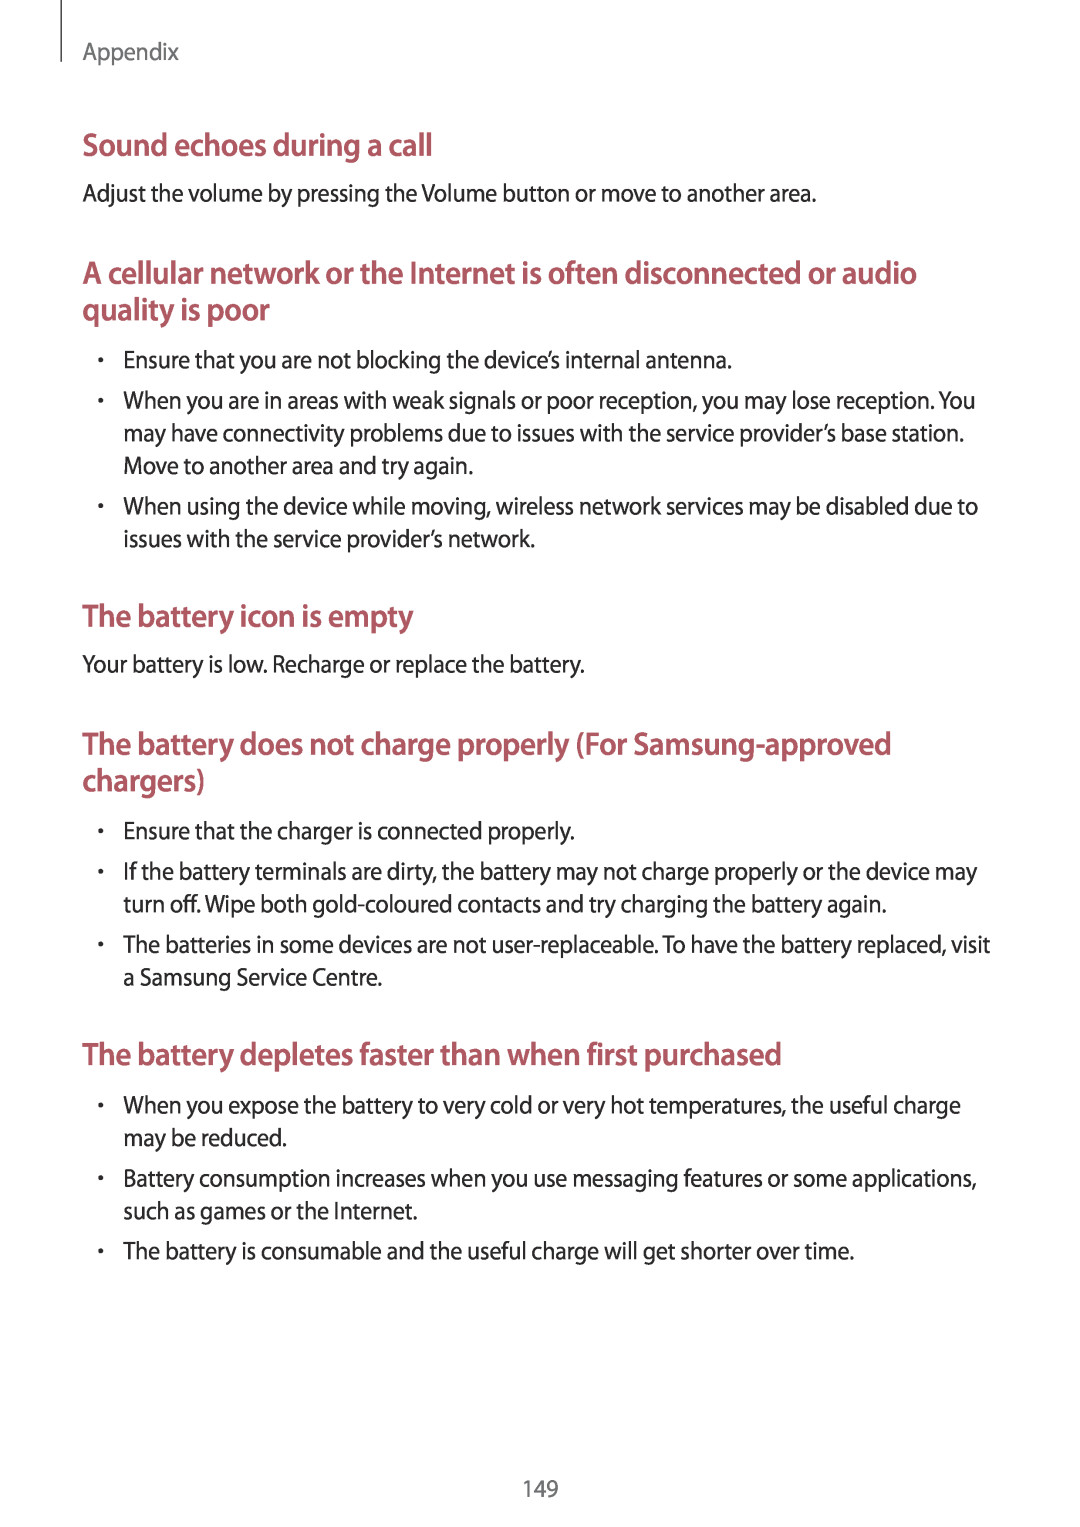 Samsung SM-P9000ZWAXEF, SM-P9000ZWAATO, SM-P9000ZKAXEO manual Sound echoes during a call, The battery icon is empty, Appendix 